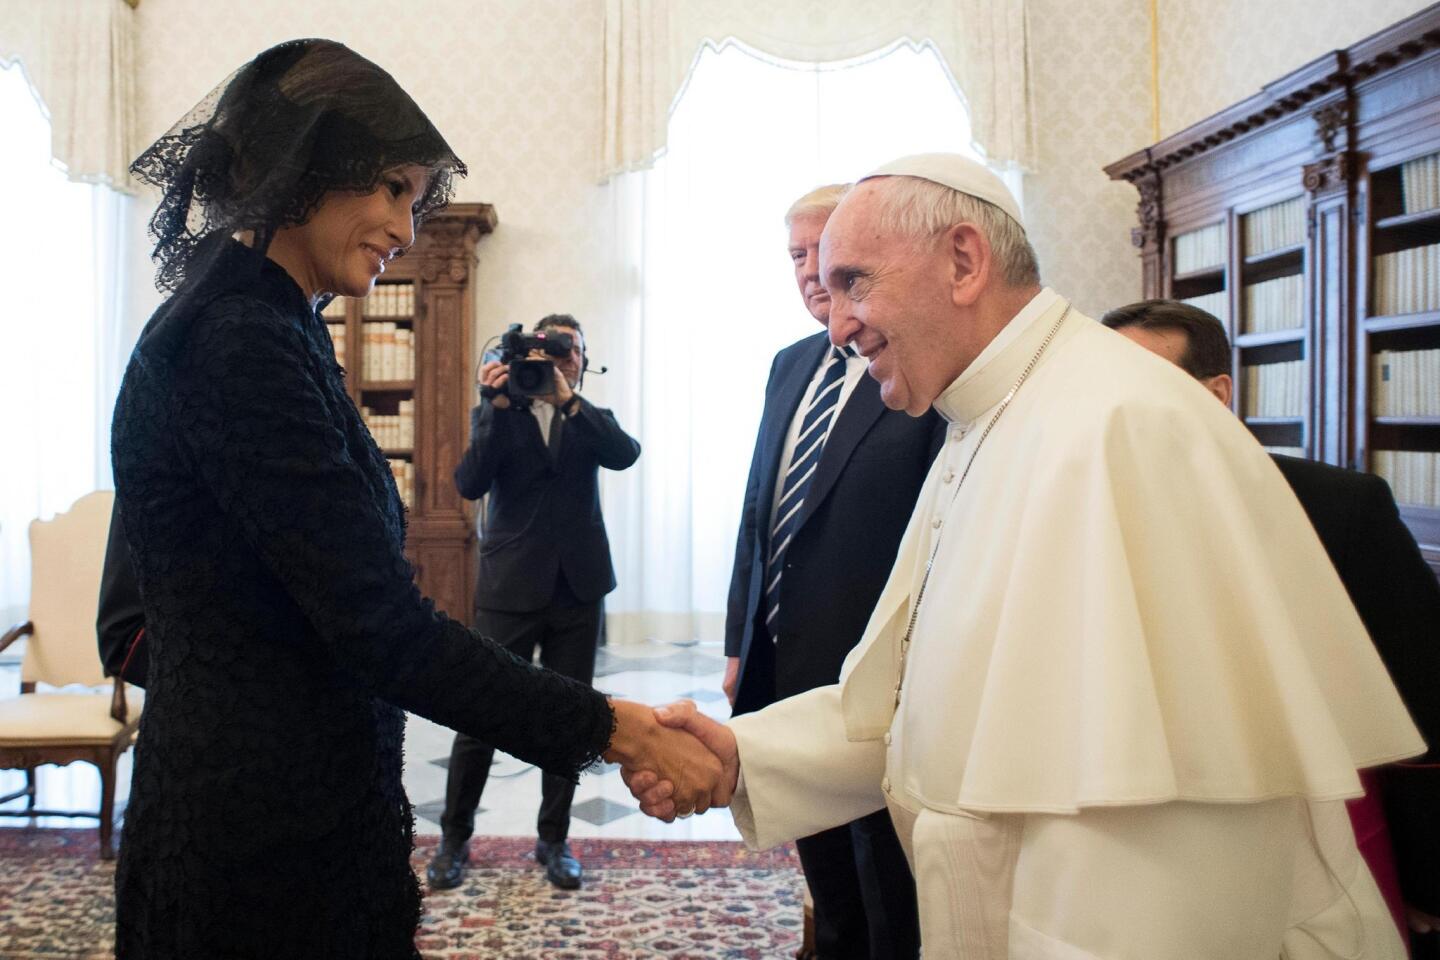 Melania Trump greets Pope Francis